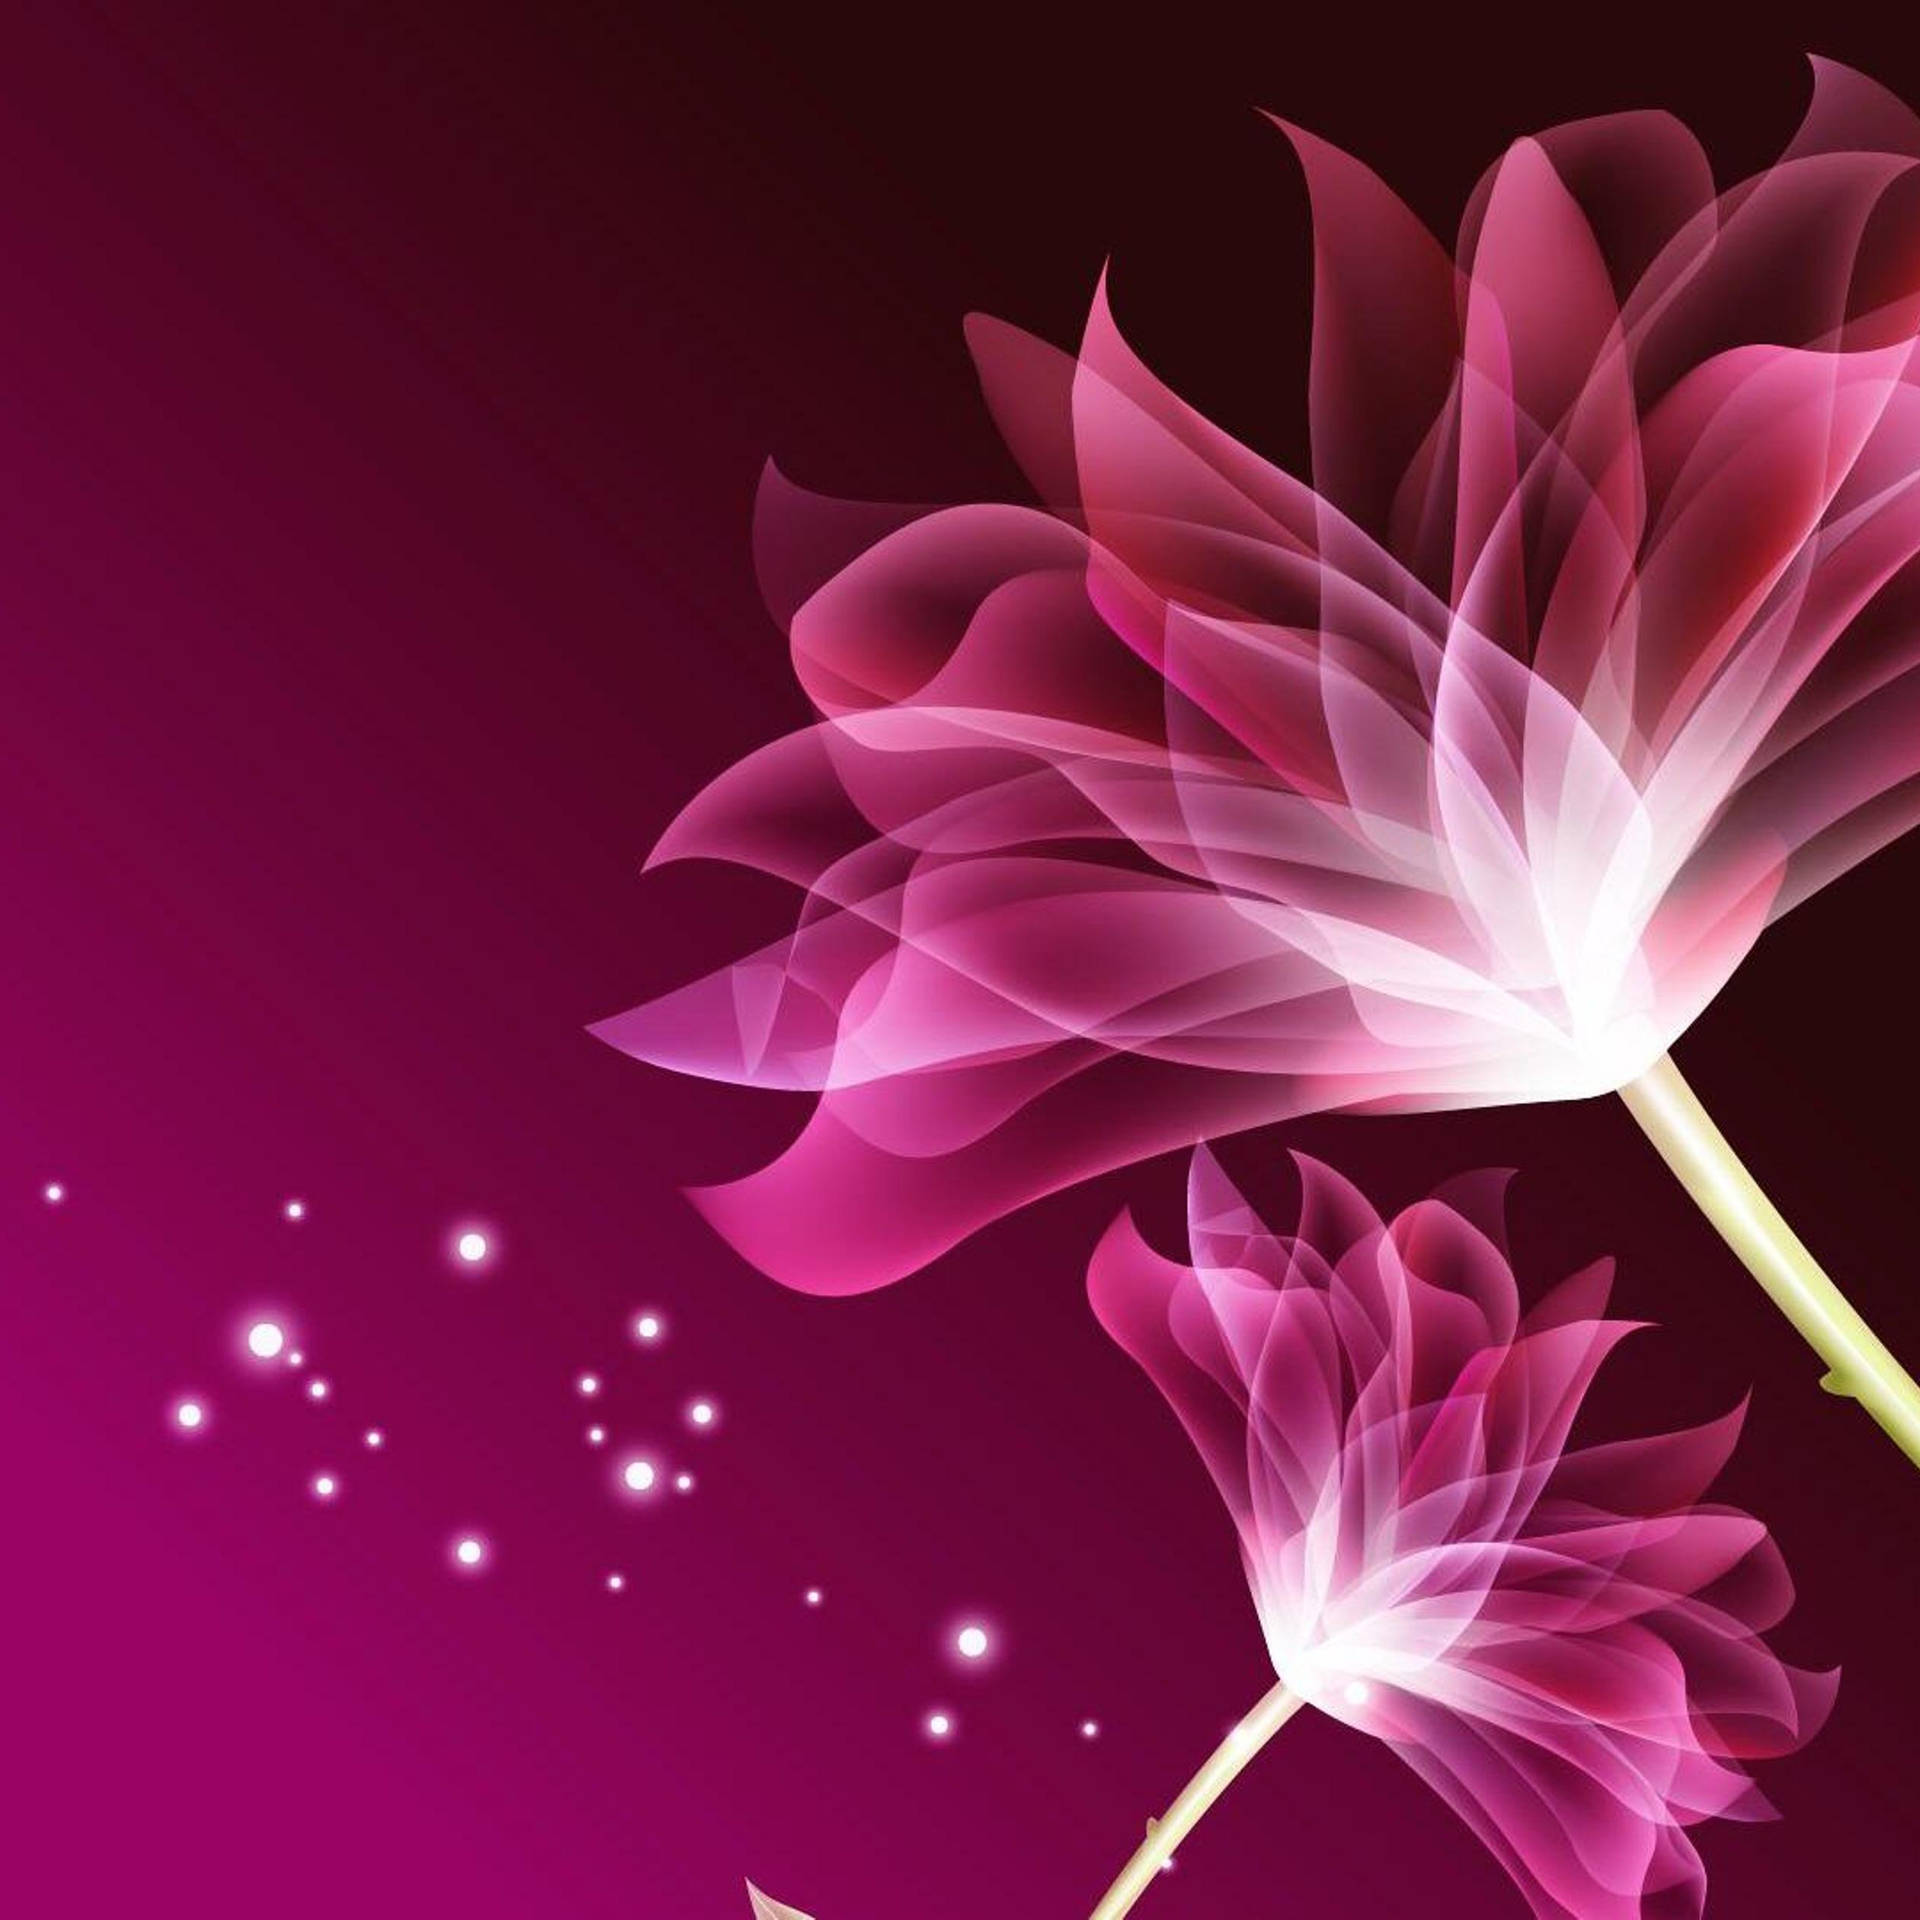 Download Glowing Pink Flower Design Wallpaper | Wallpapers.com